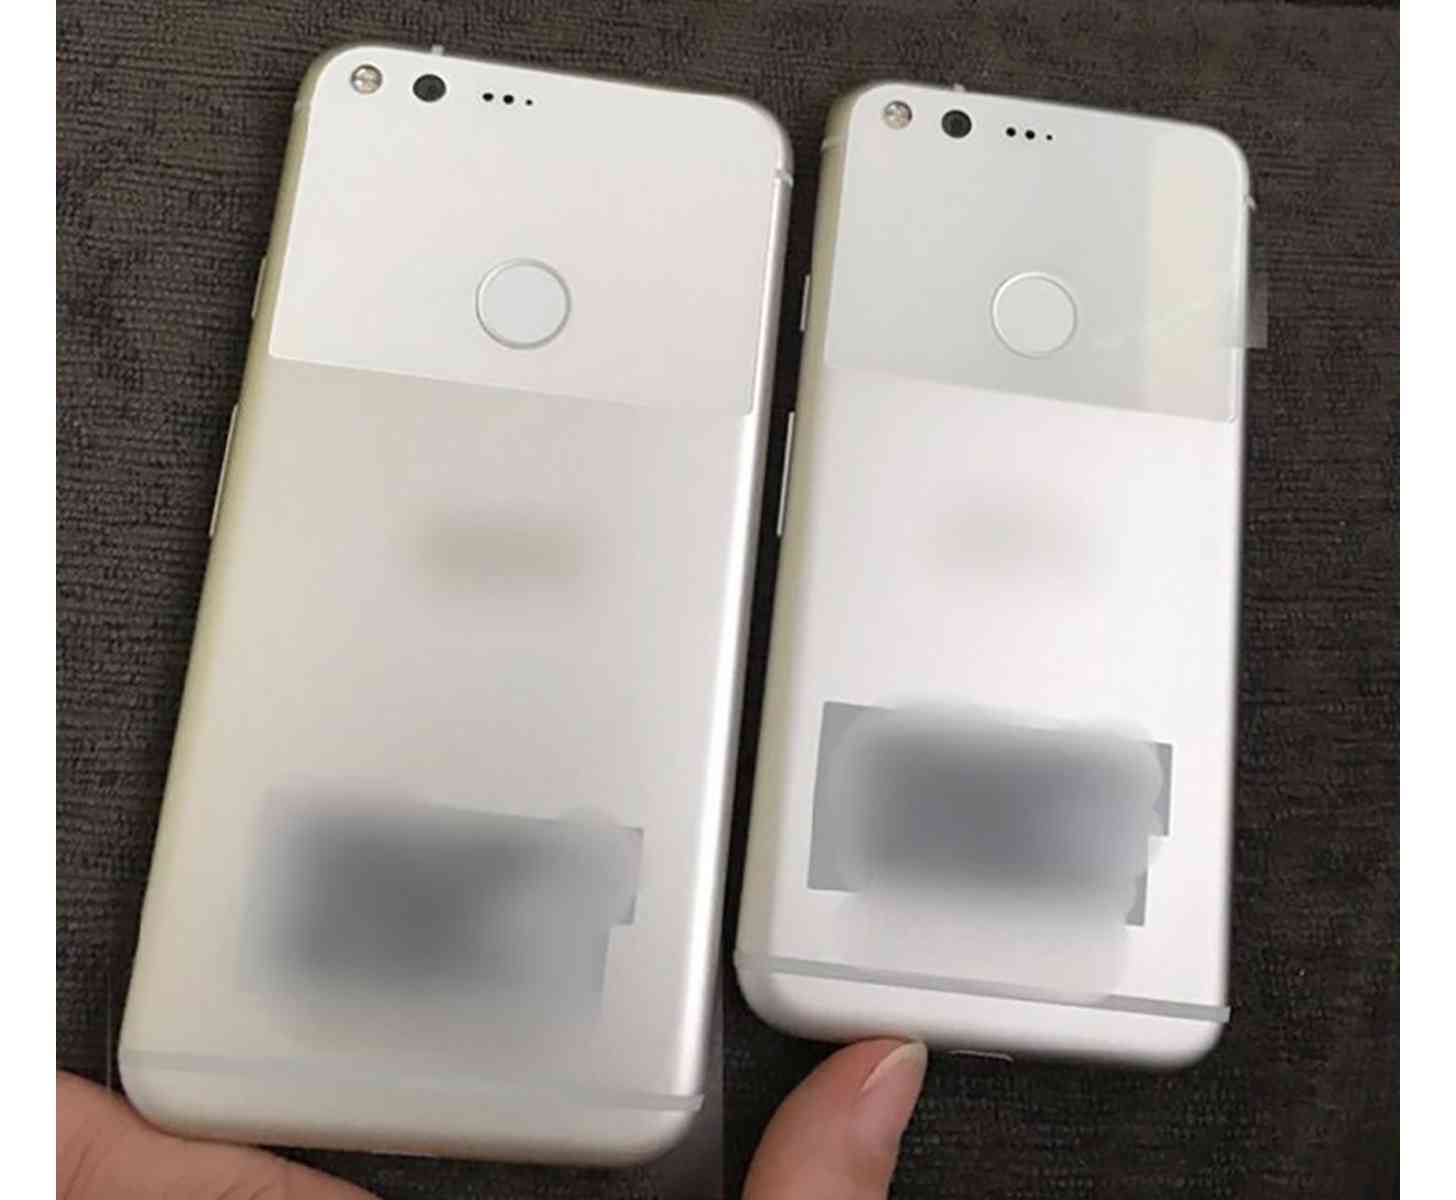 Google Pixel phones rear image leak